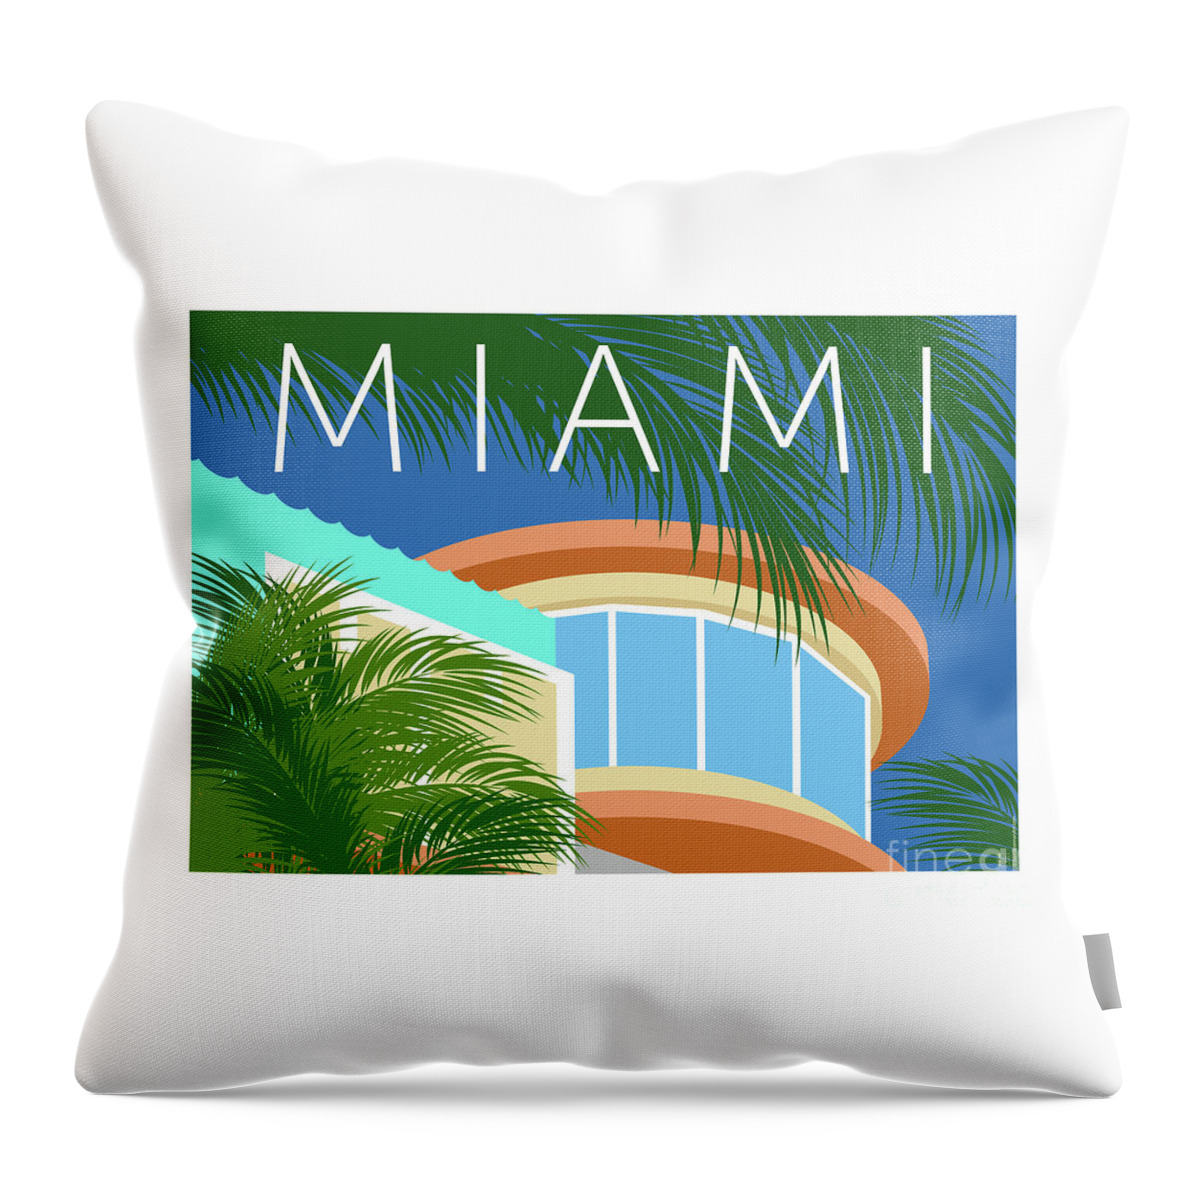 Miami Throw Pillow featuring the digital art Miami Round Tower by Sam Brennan